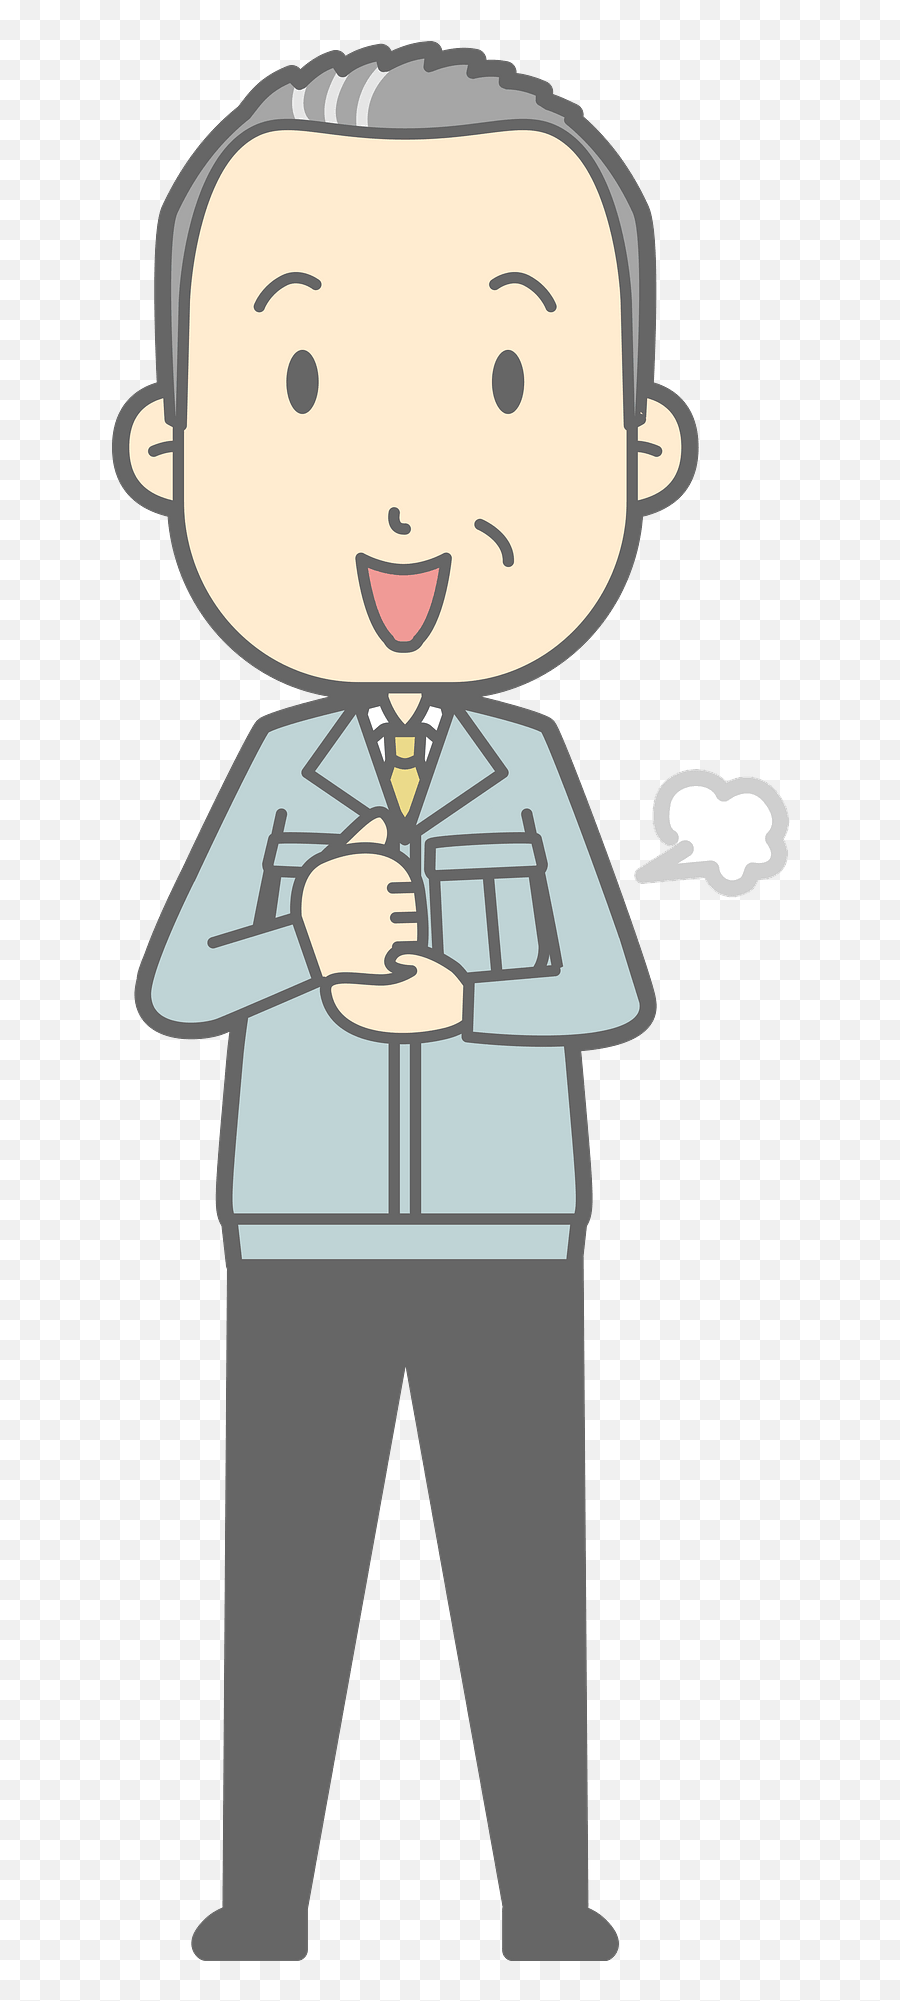 Matt Businessman Has An Idea Clipart Free Download - Worker Emoji,Idea Clipart